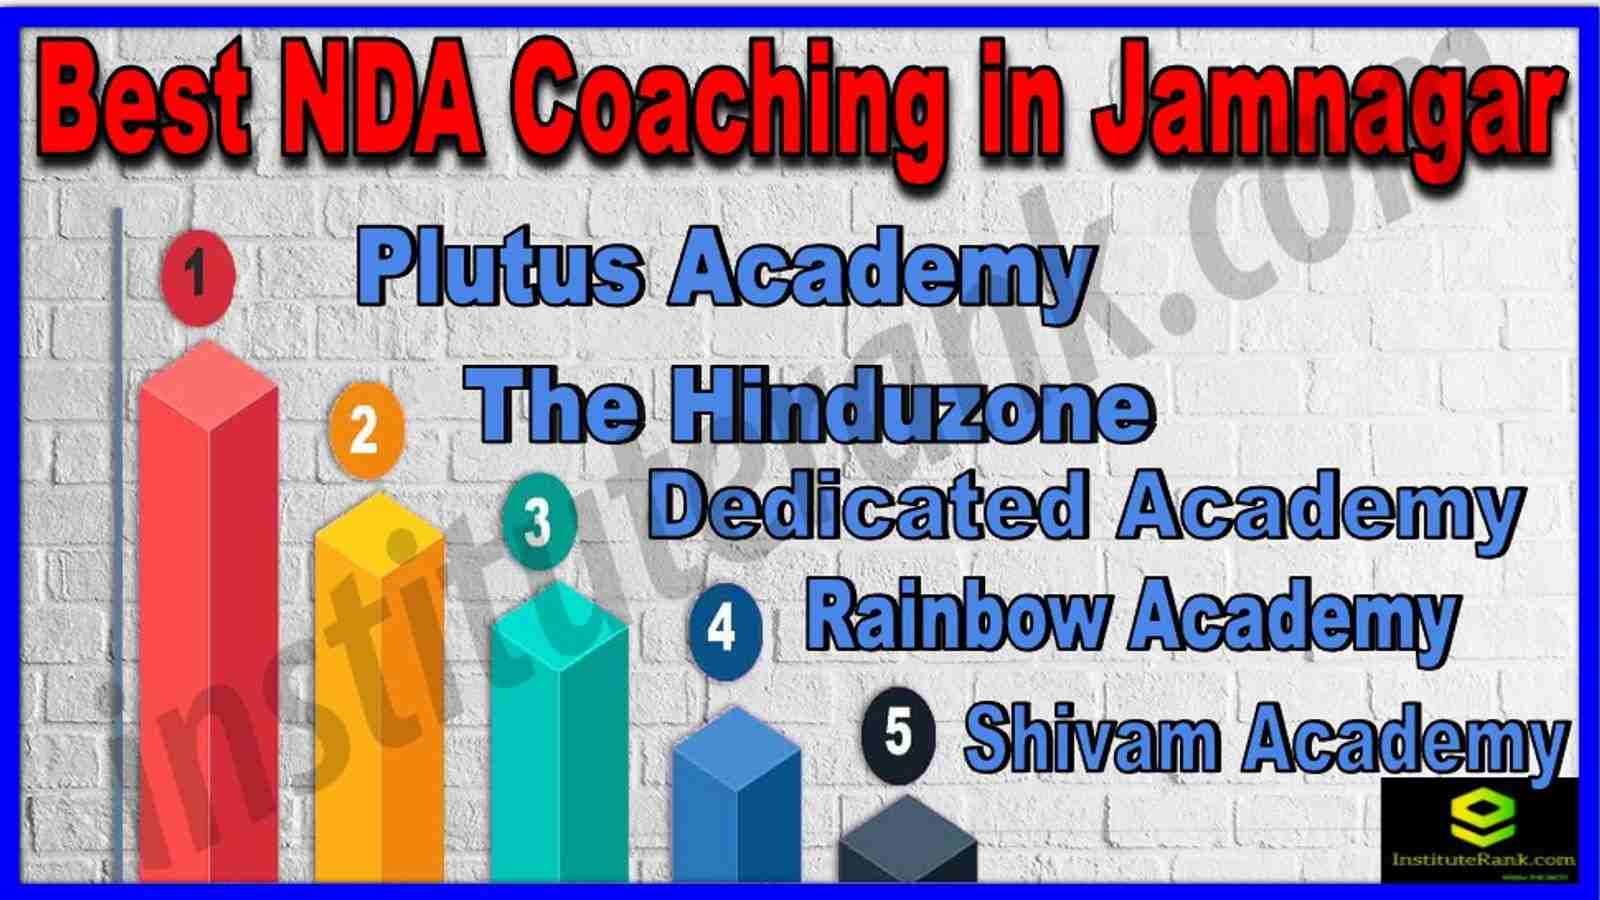 Best NDA Coaching in Jamnagar